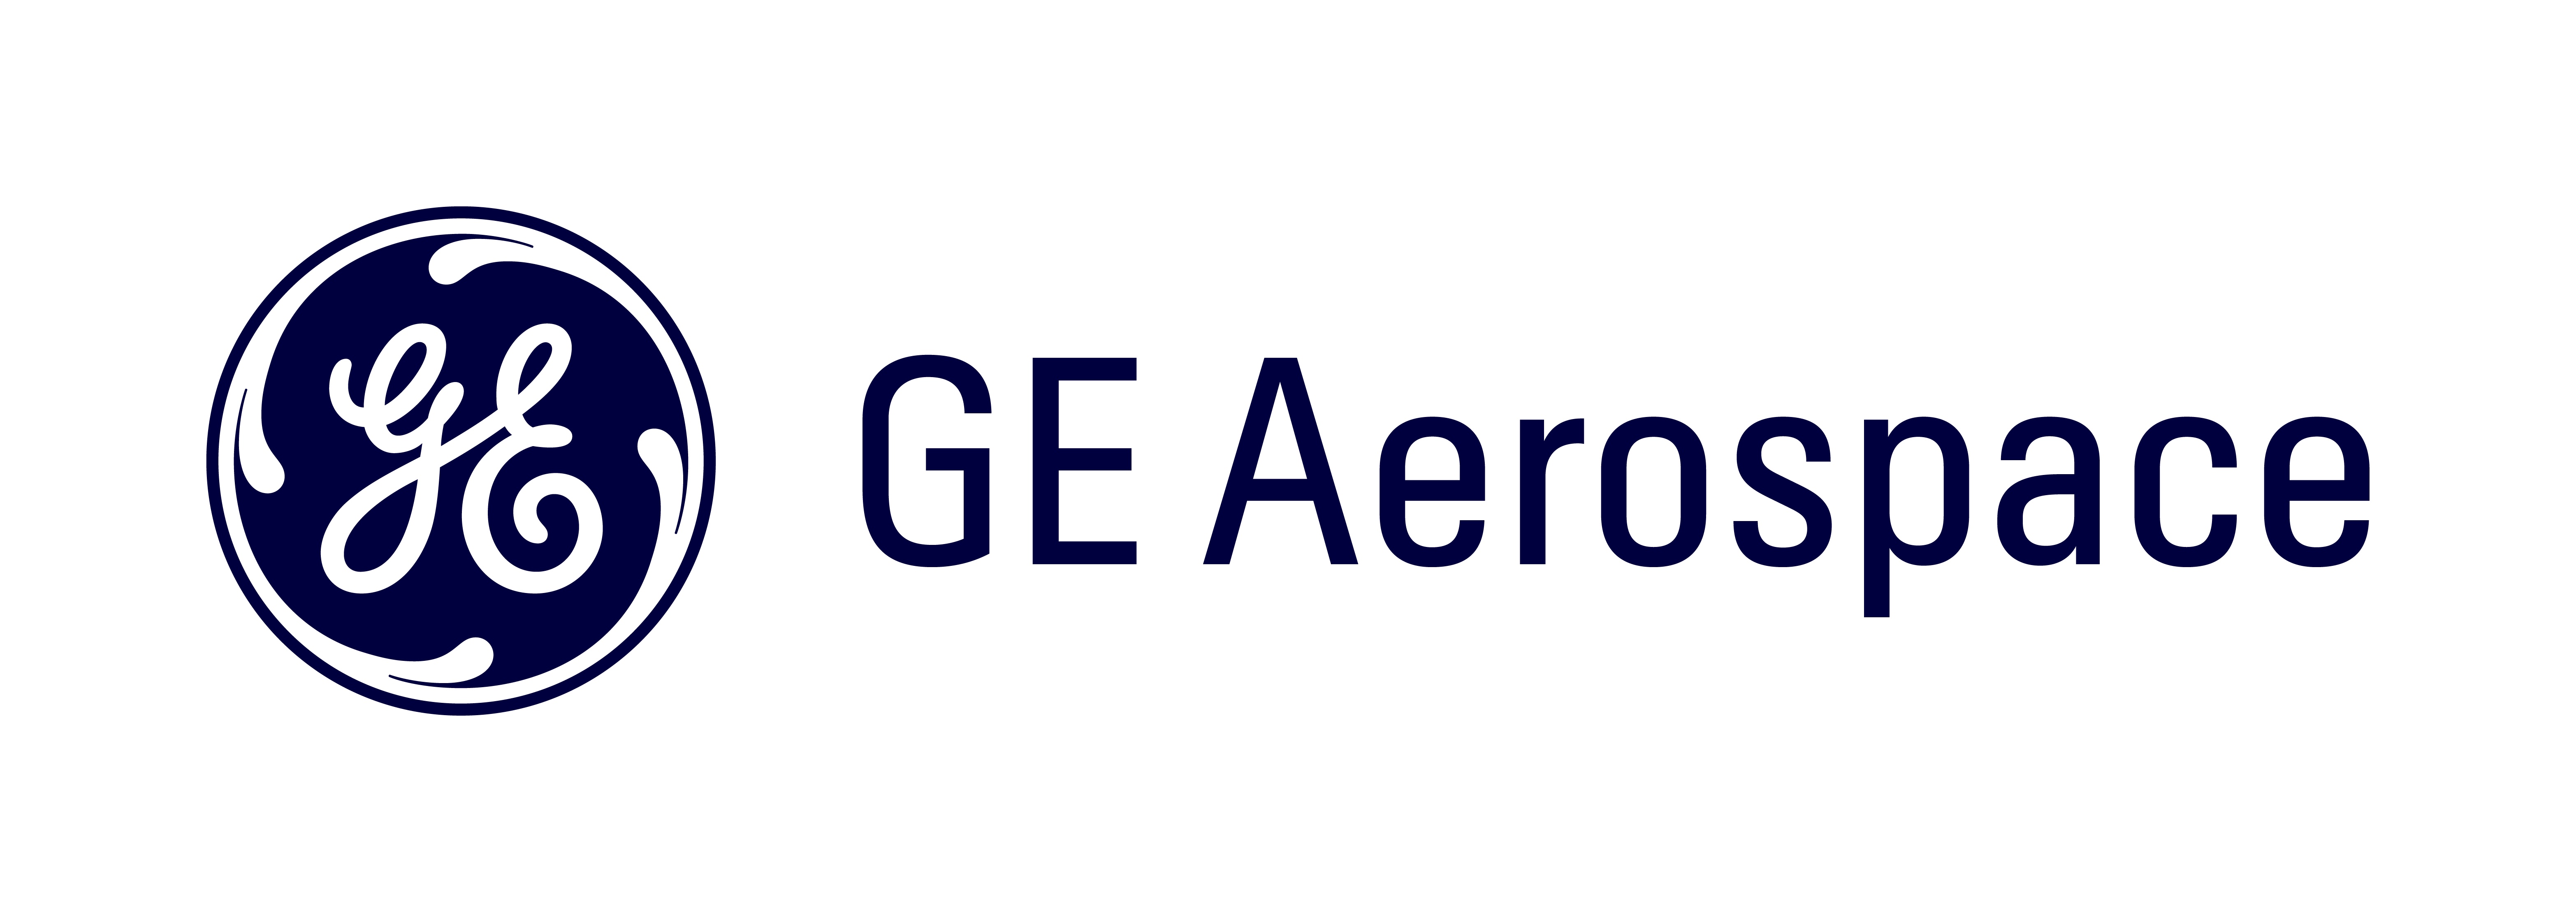 ge_aerospacexstandardxrgb-a.jpg